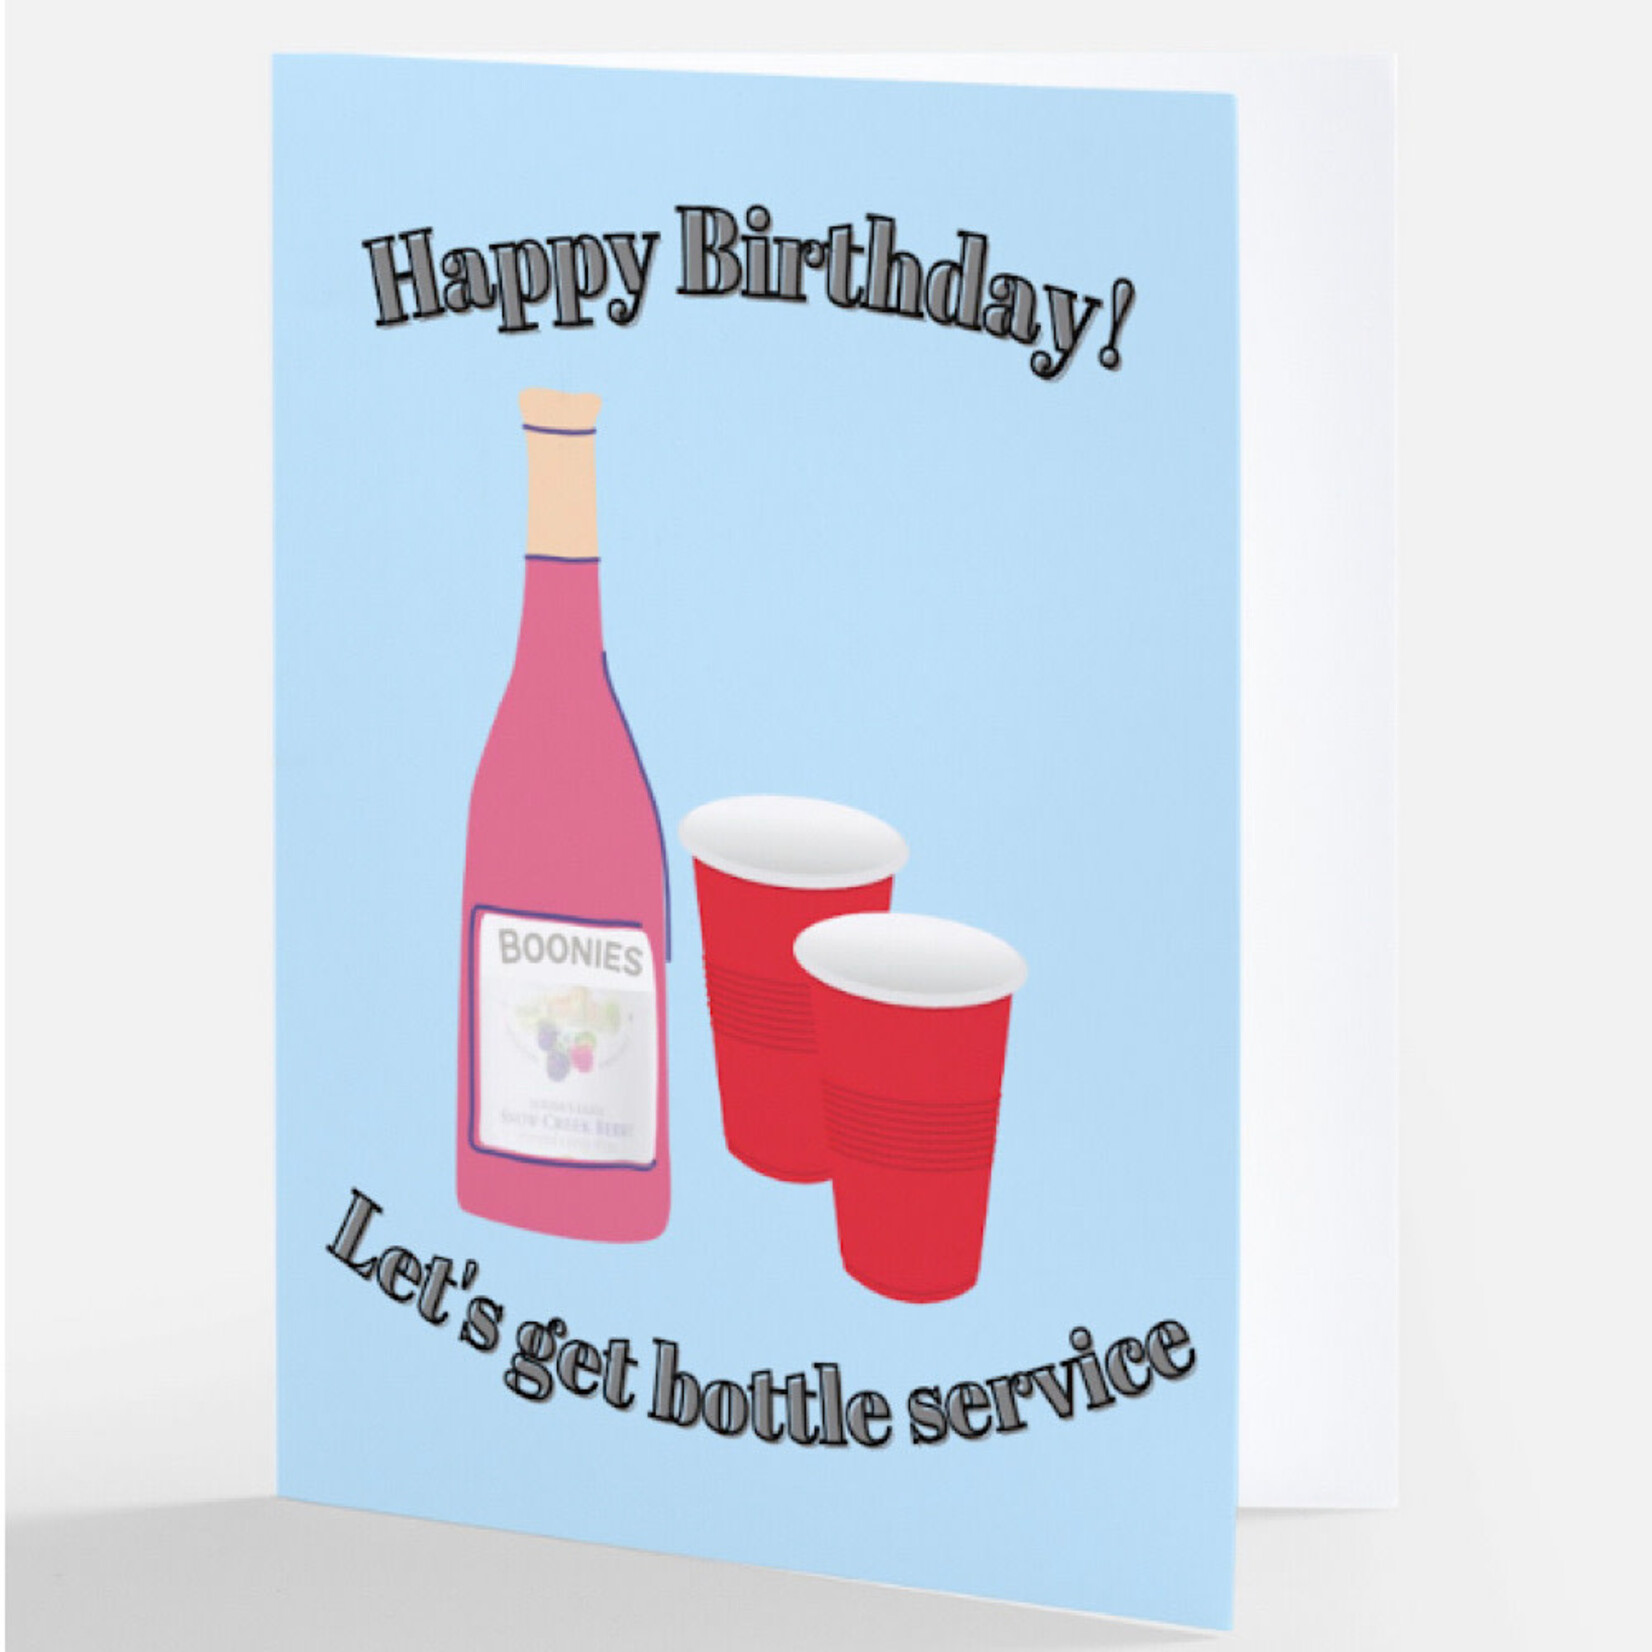 Bad Annie’s Card - Happy Birthday! Let’s Get Bottle Service